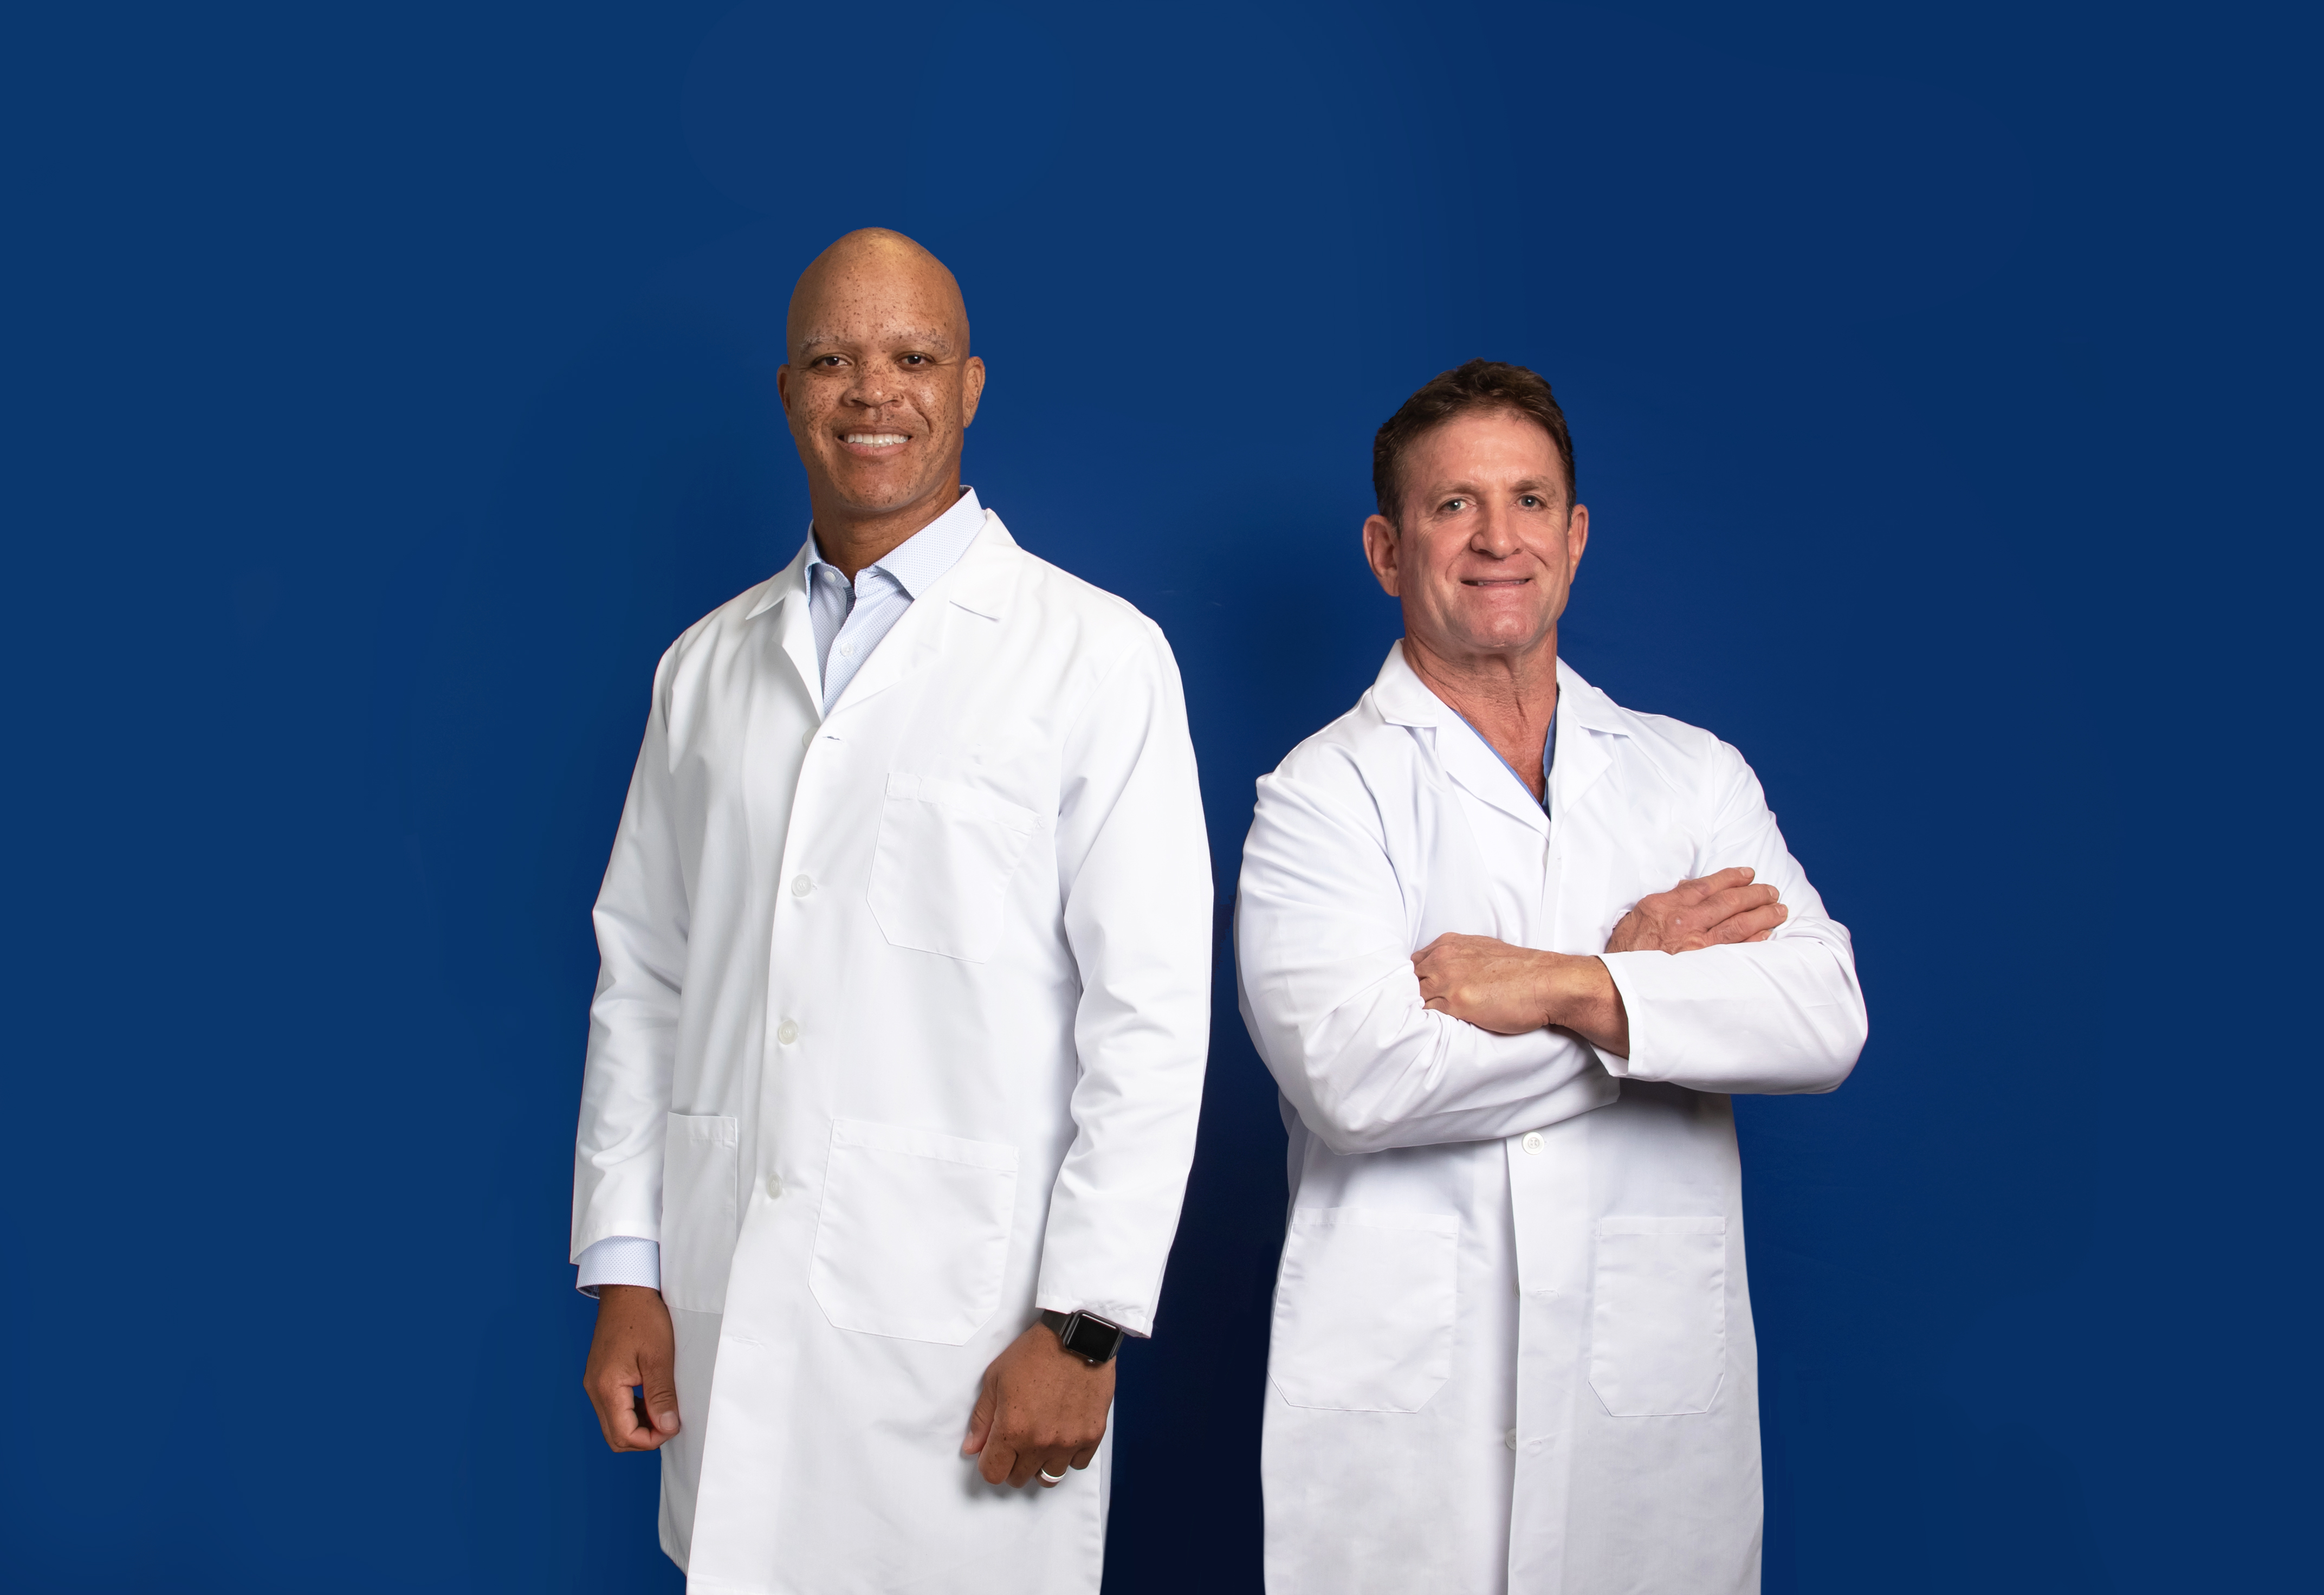 Orthopedic physicians Sands, Lombardo join Steward Health Care team